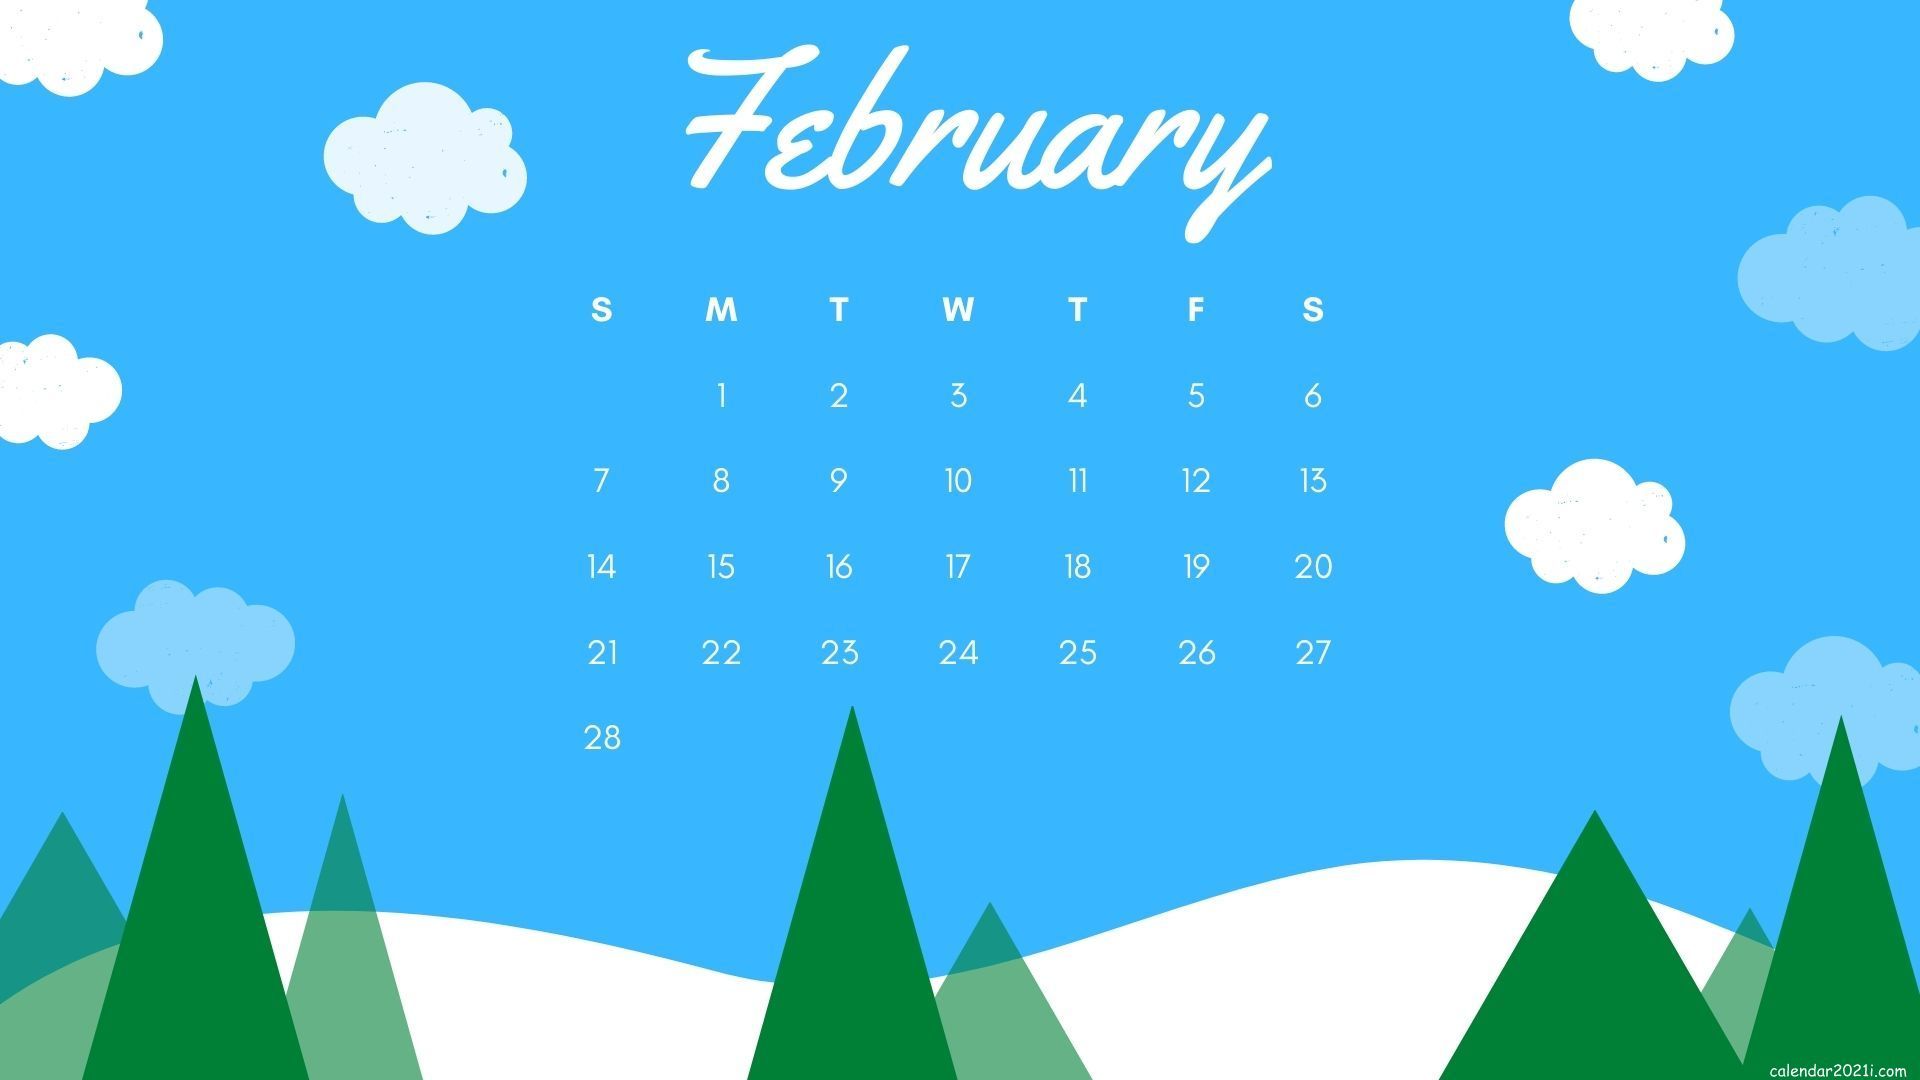 February 2021 Calendar Wallpaper Free Download